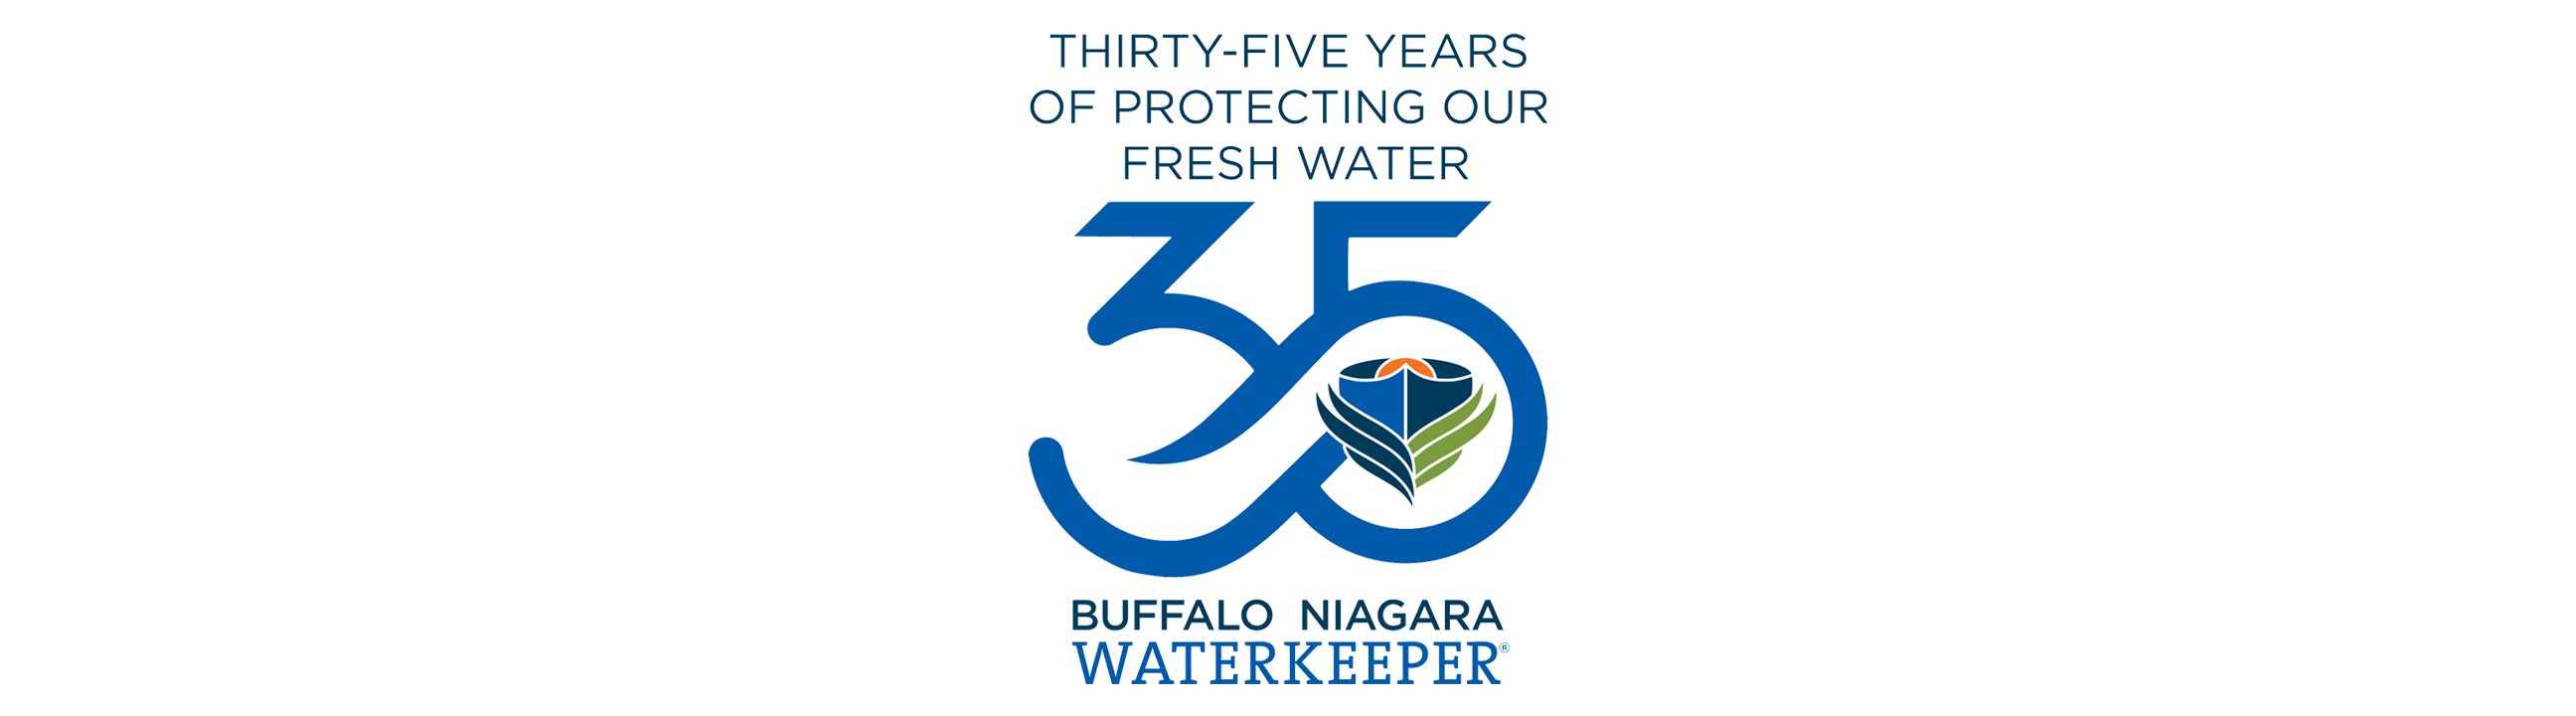 Thirty-five years of protecting our fresh water. Buffalo Niagara Waterkeeper 35